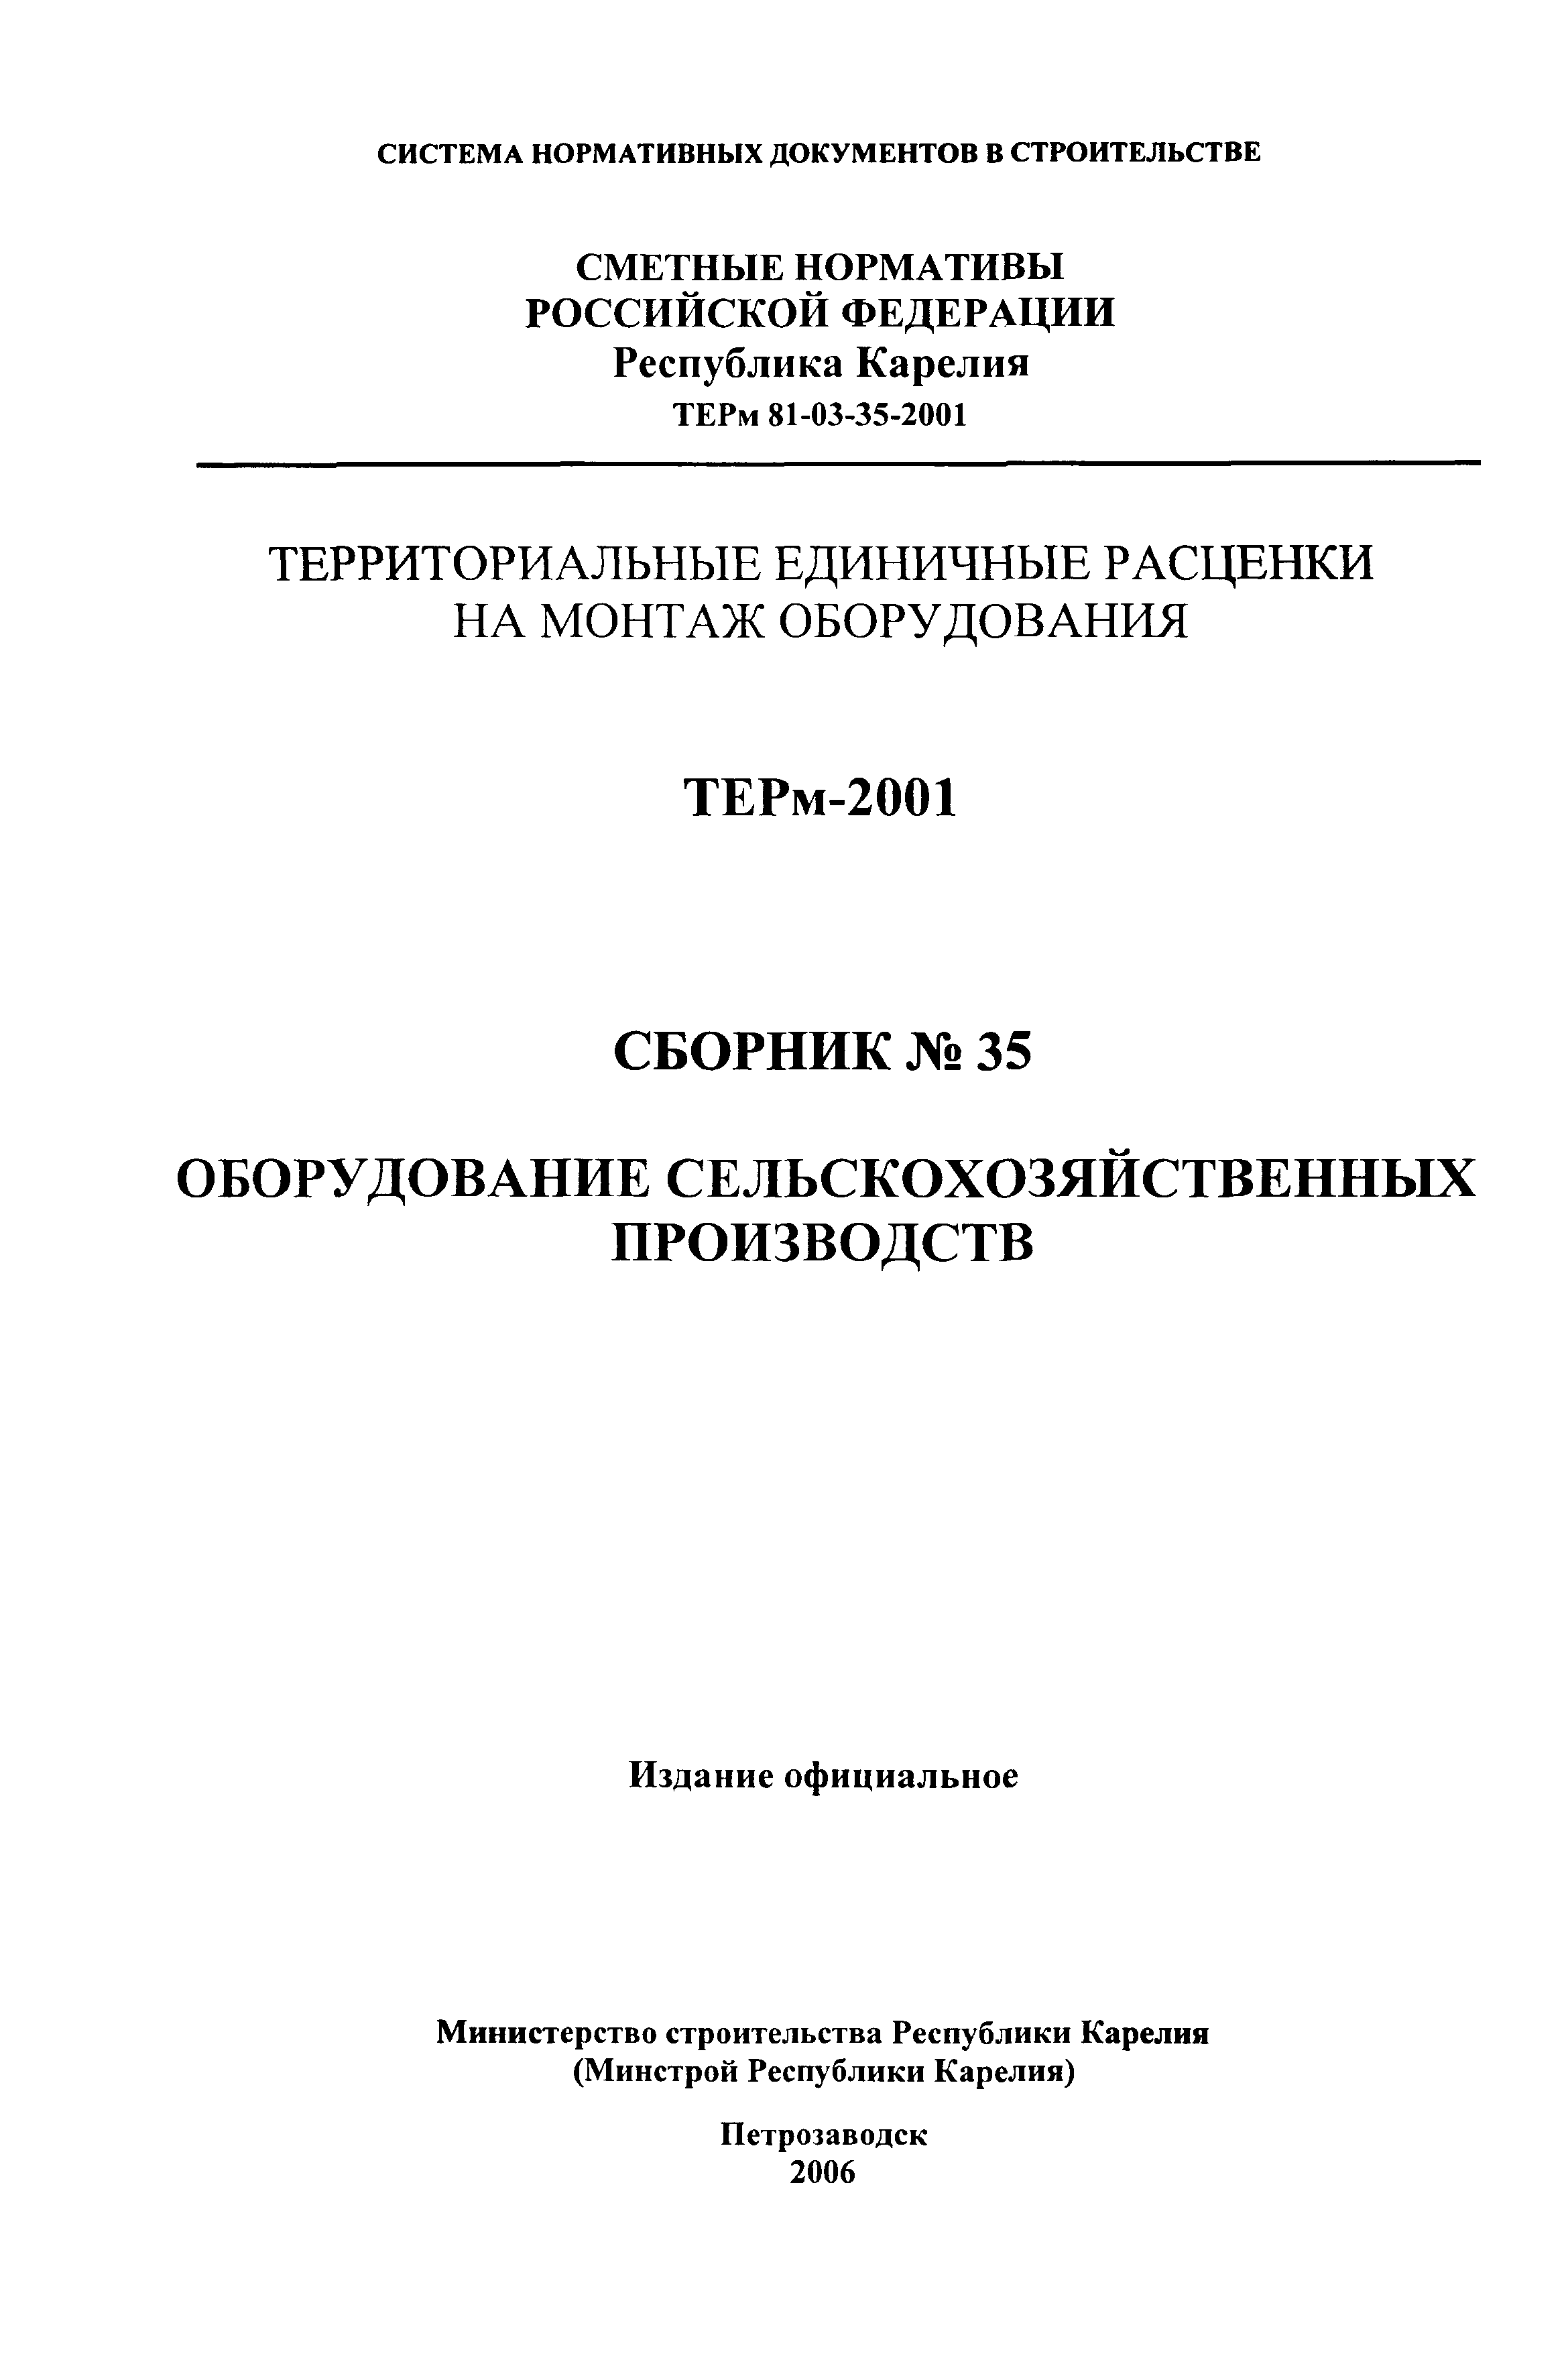 ТЕРм Республика Карелия 2001-35